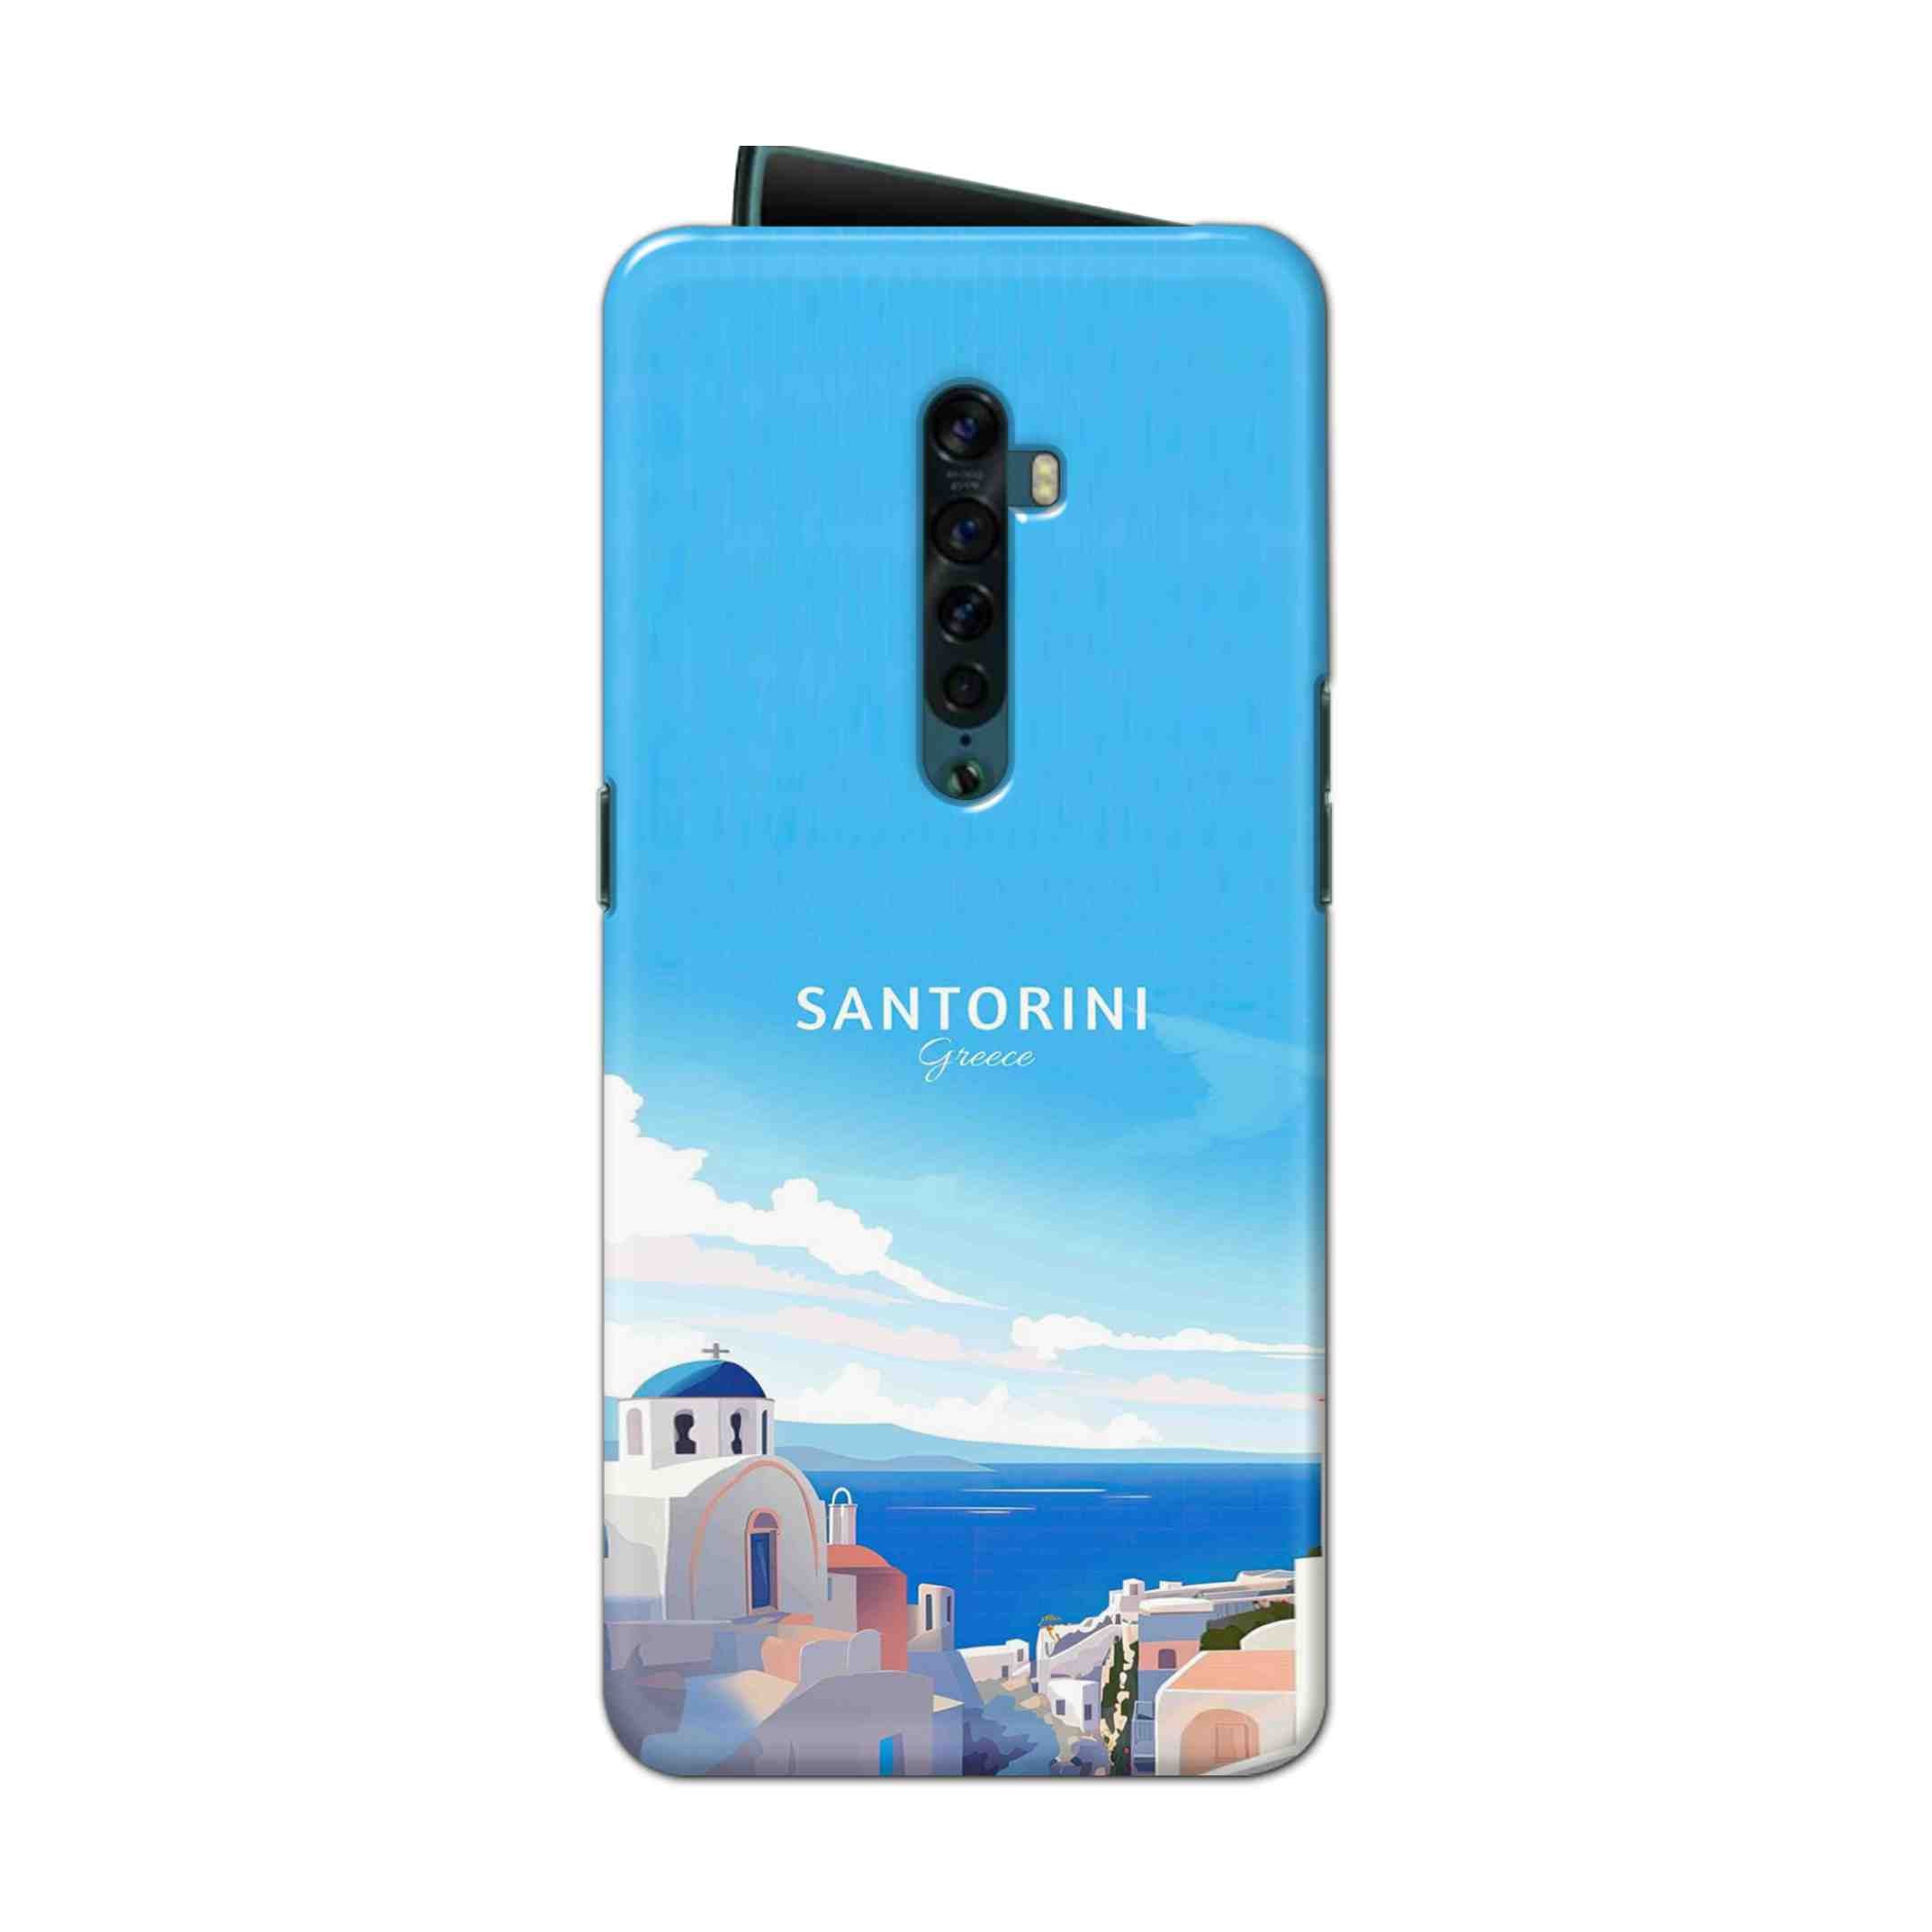 Buy Santorini Hard Back Mobile Phone Case Cover For Oppo Reno 2 Online